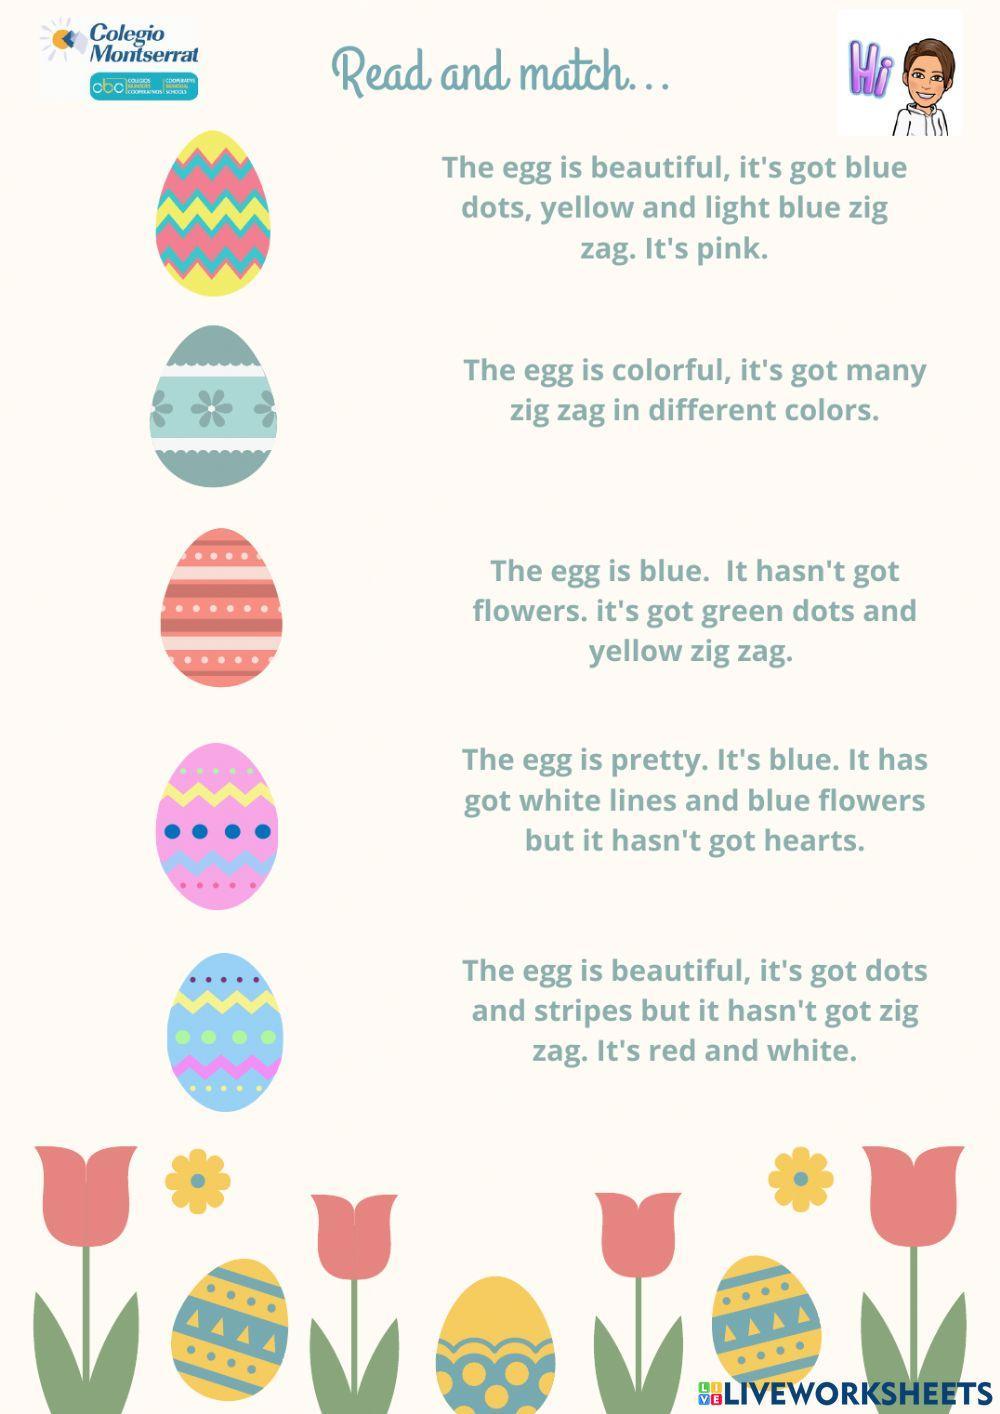 Read and match. Eggs descriptions.